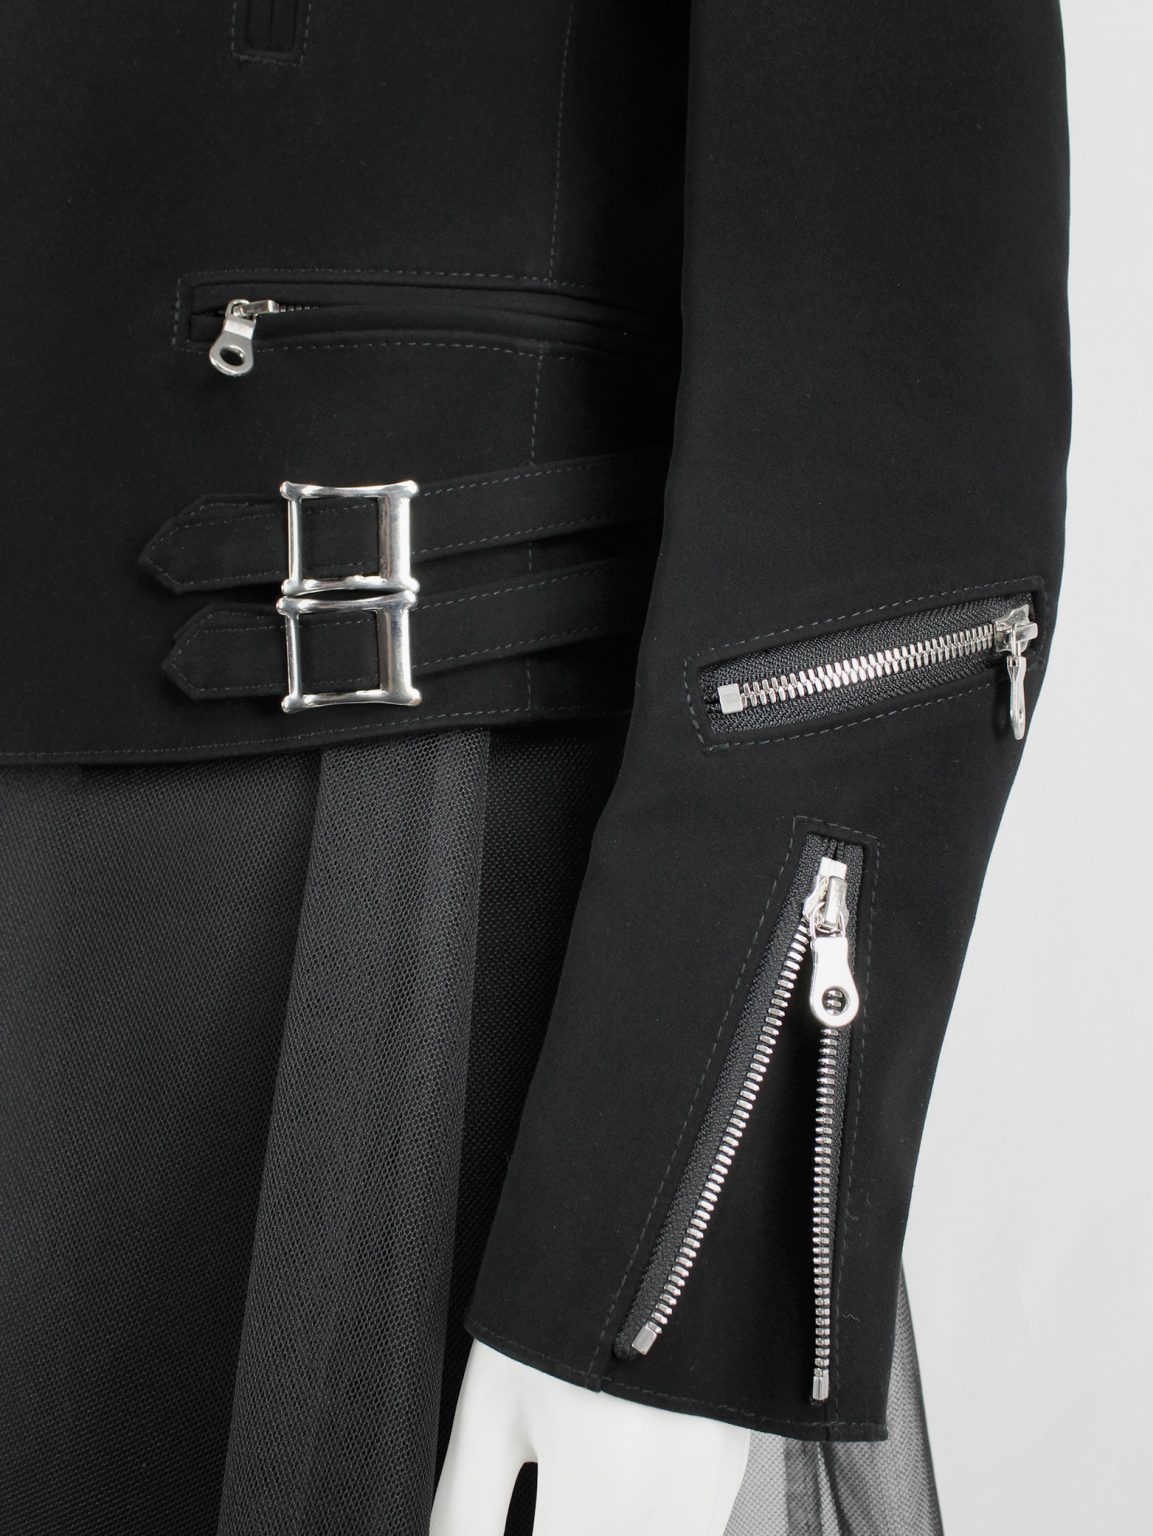 Noir Kei Ninomiya black bicker jacket with pearls around the sleeves — spring 2015